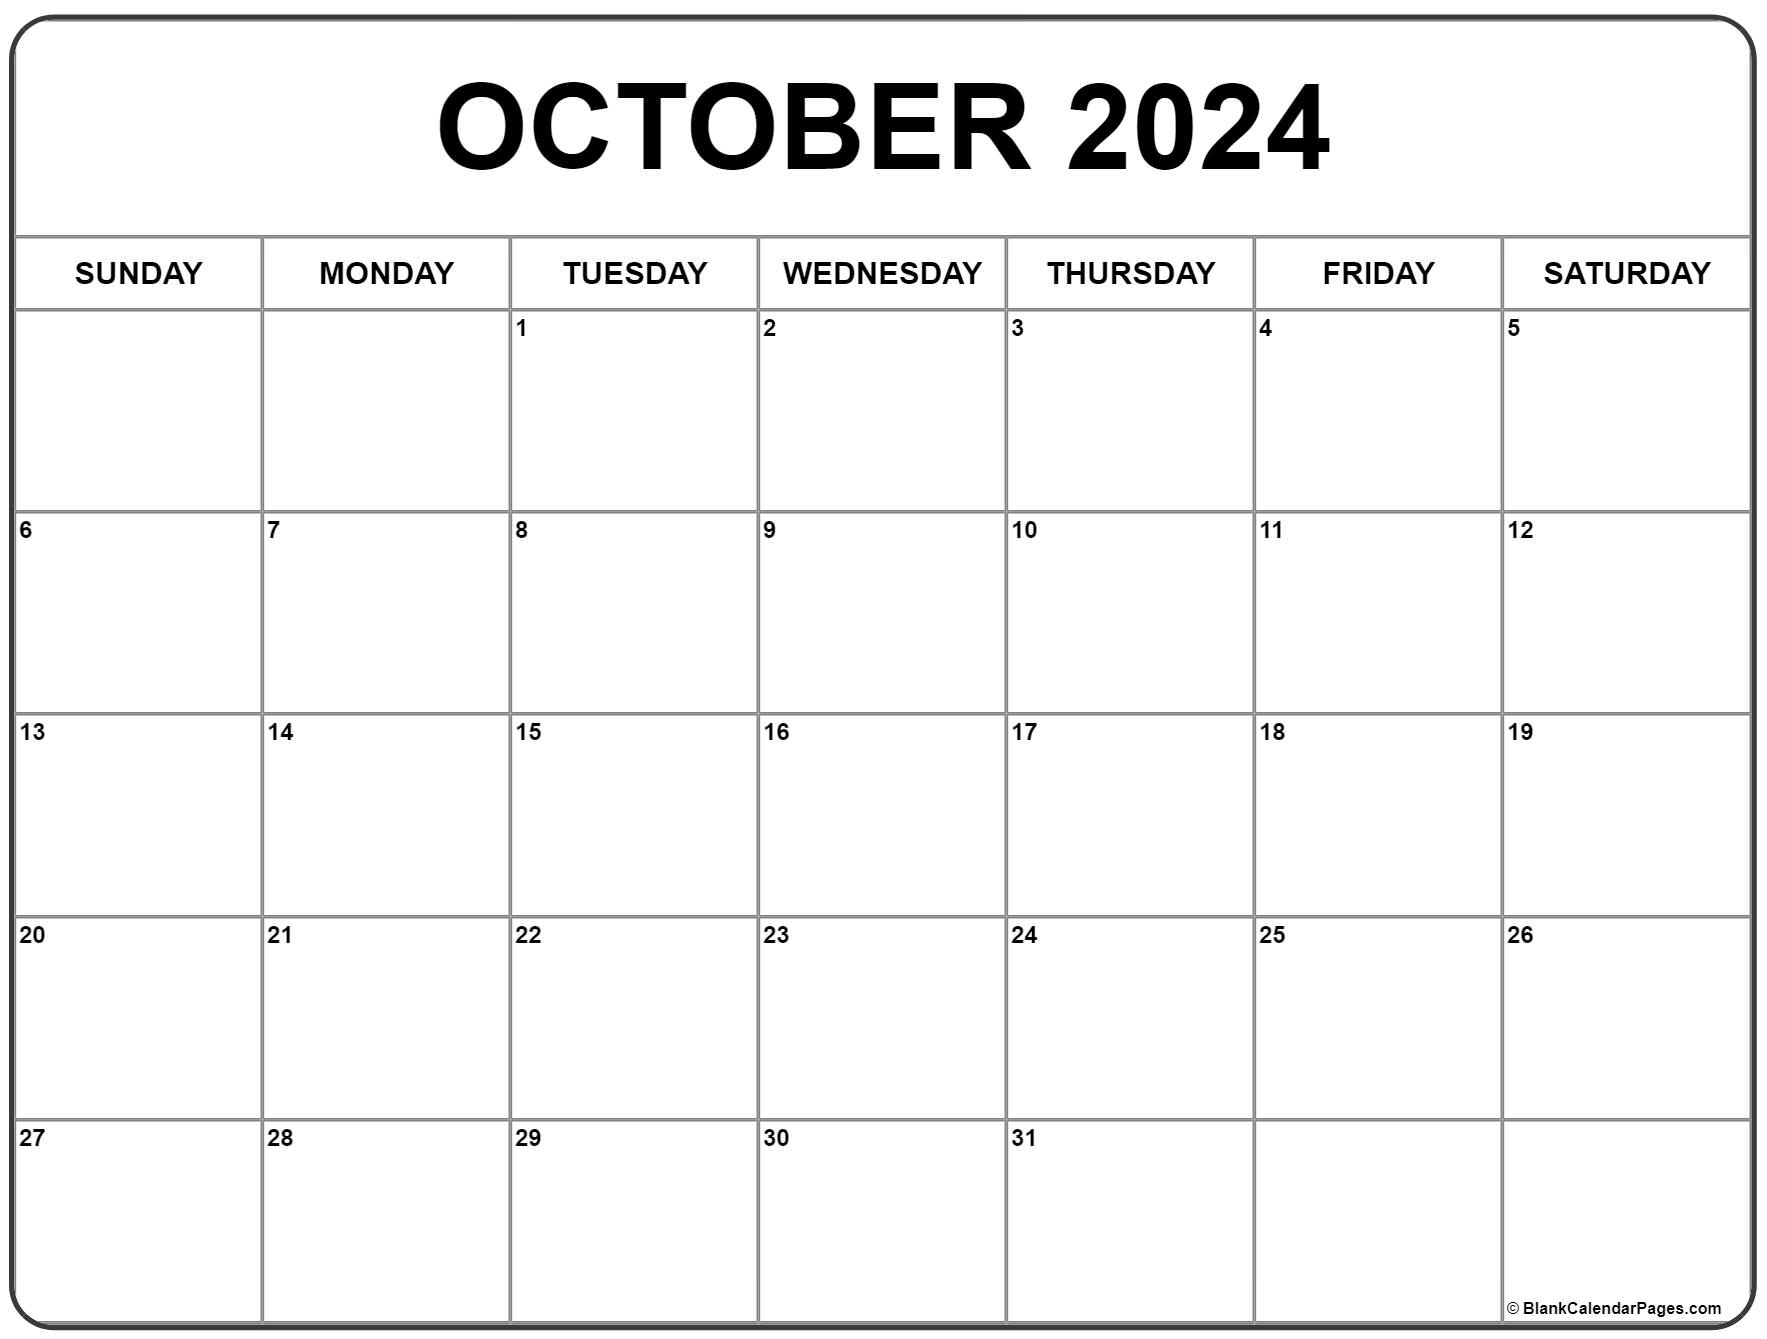 October 2024 Calendar | Free Printable Calendar for Free Printable October 2024 Calendar